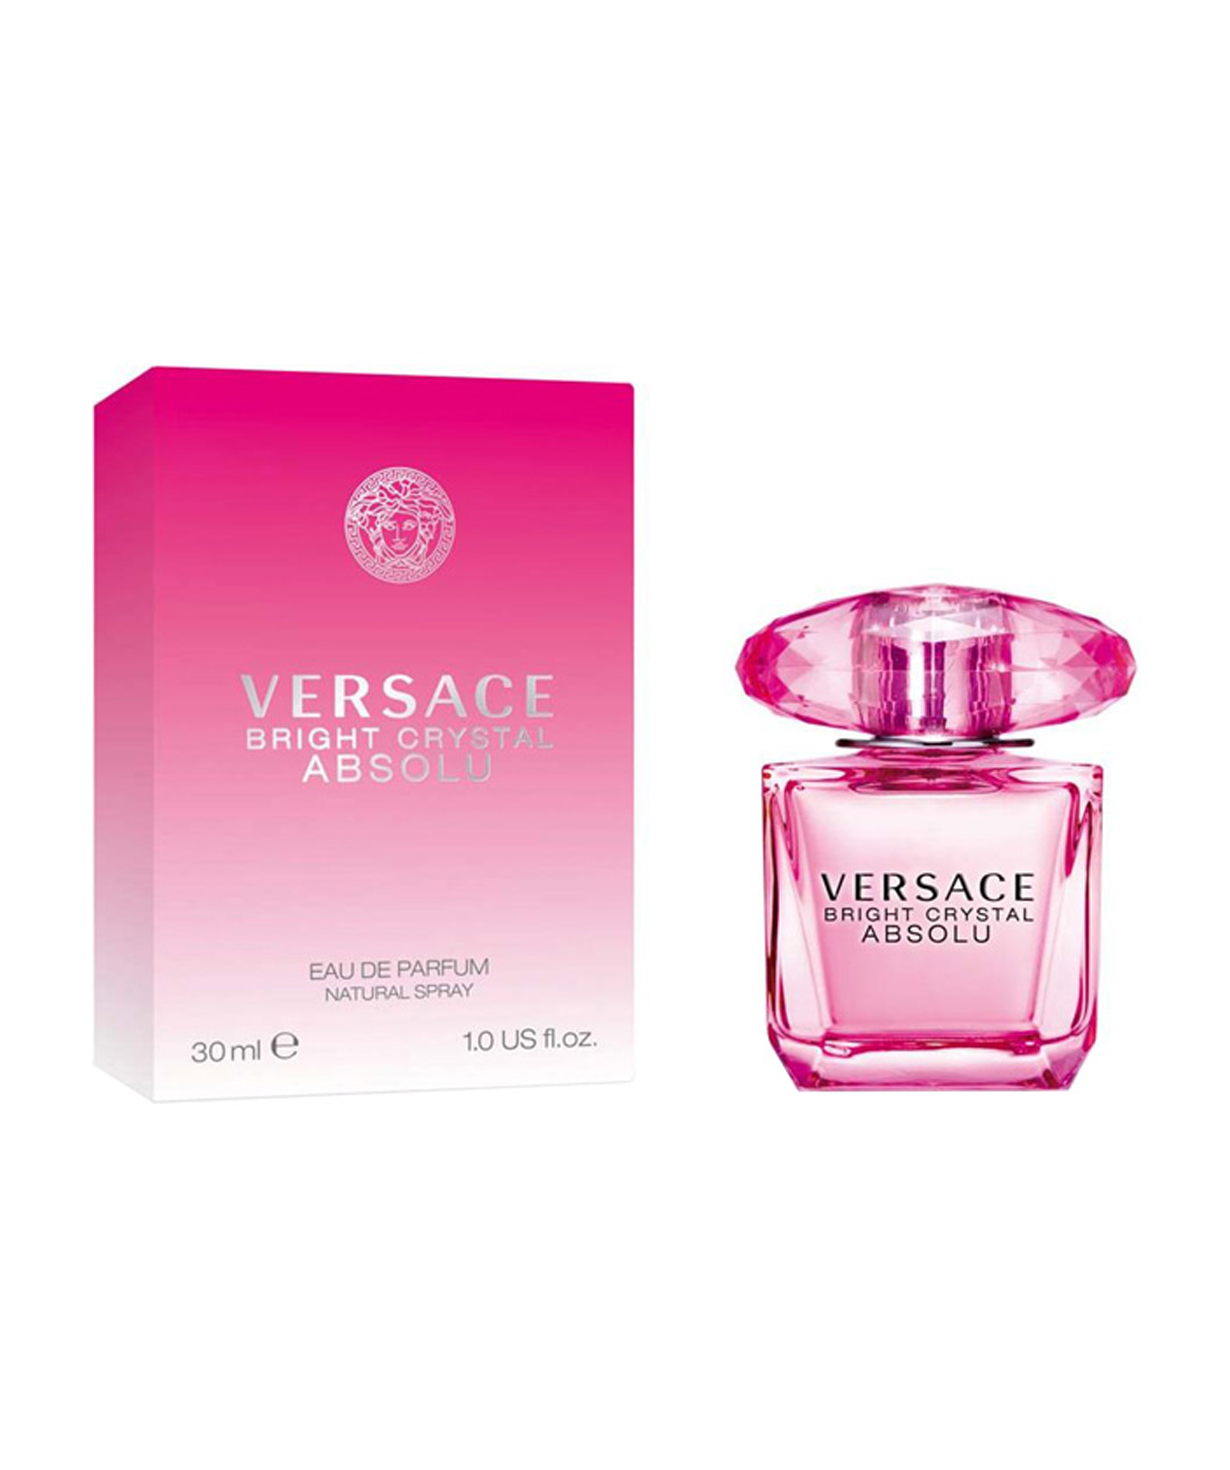 Perfume «Versace» Bright Crystal Absolu, for women, 30 ml